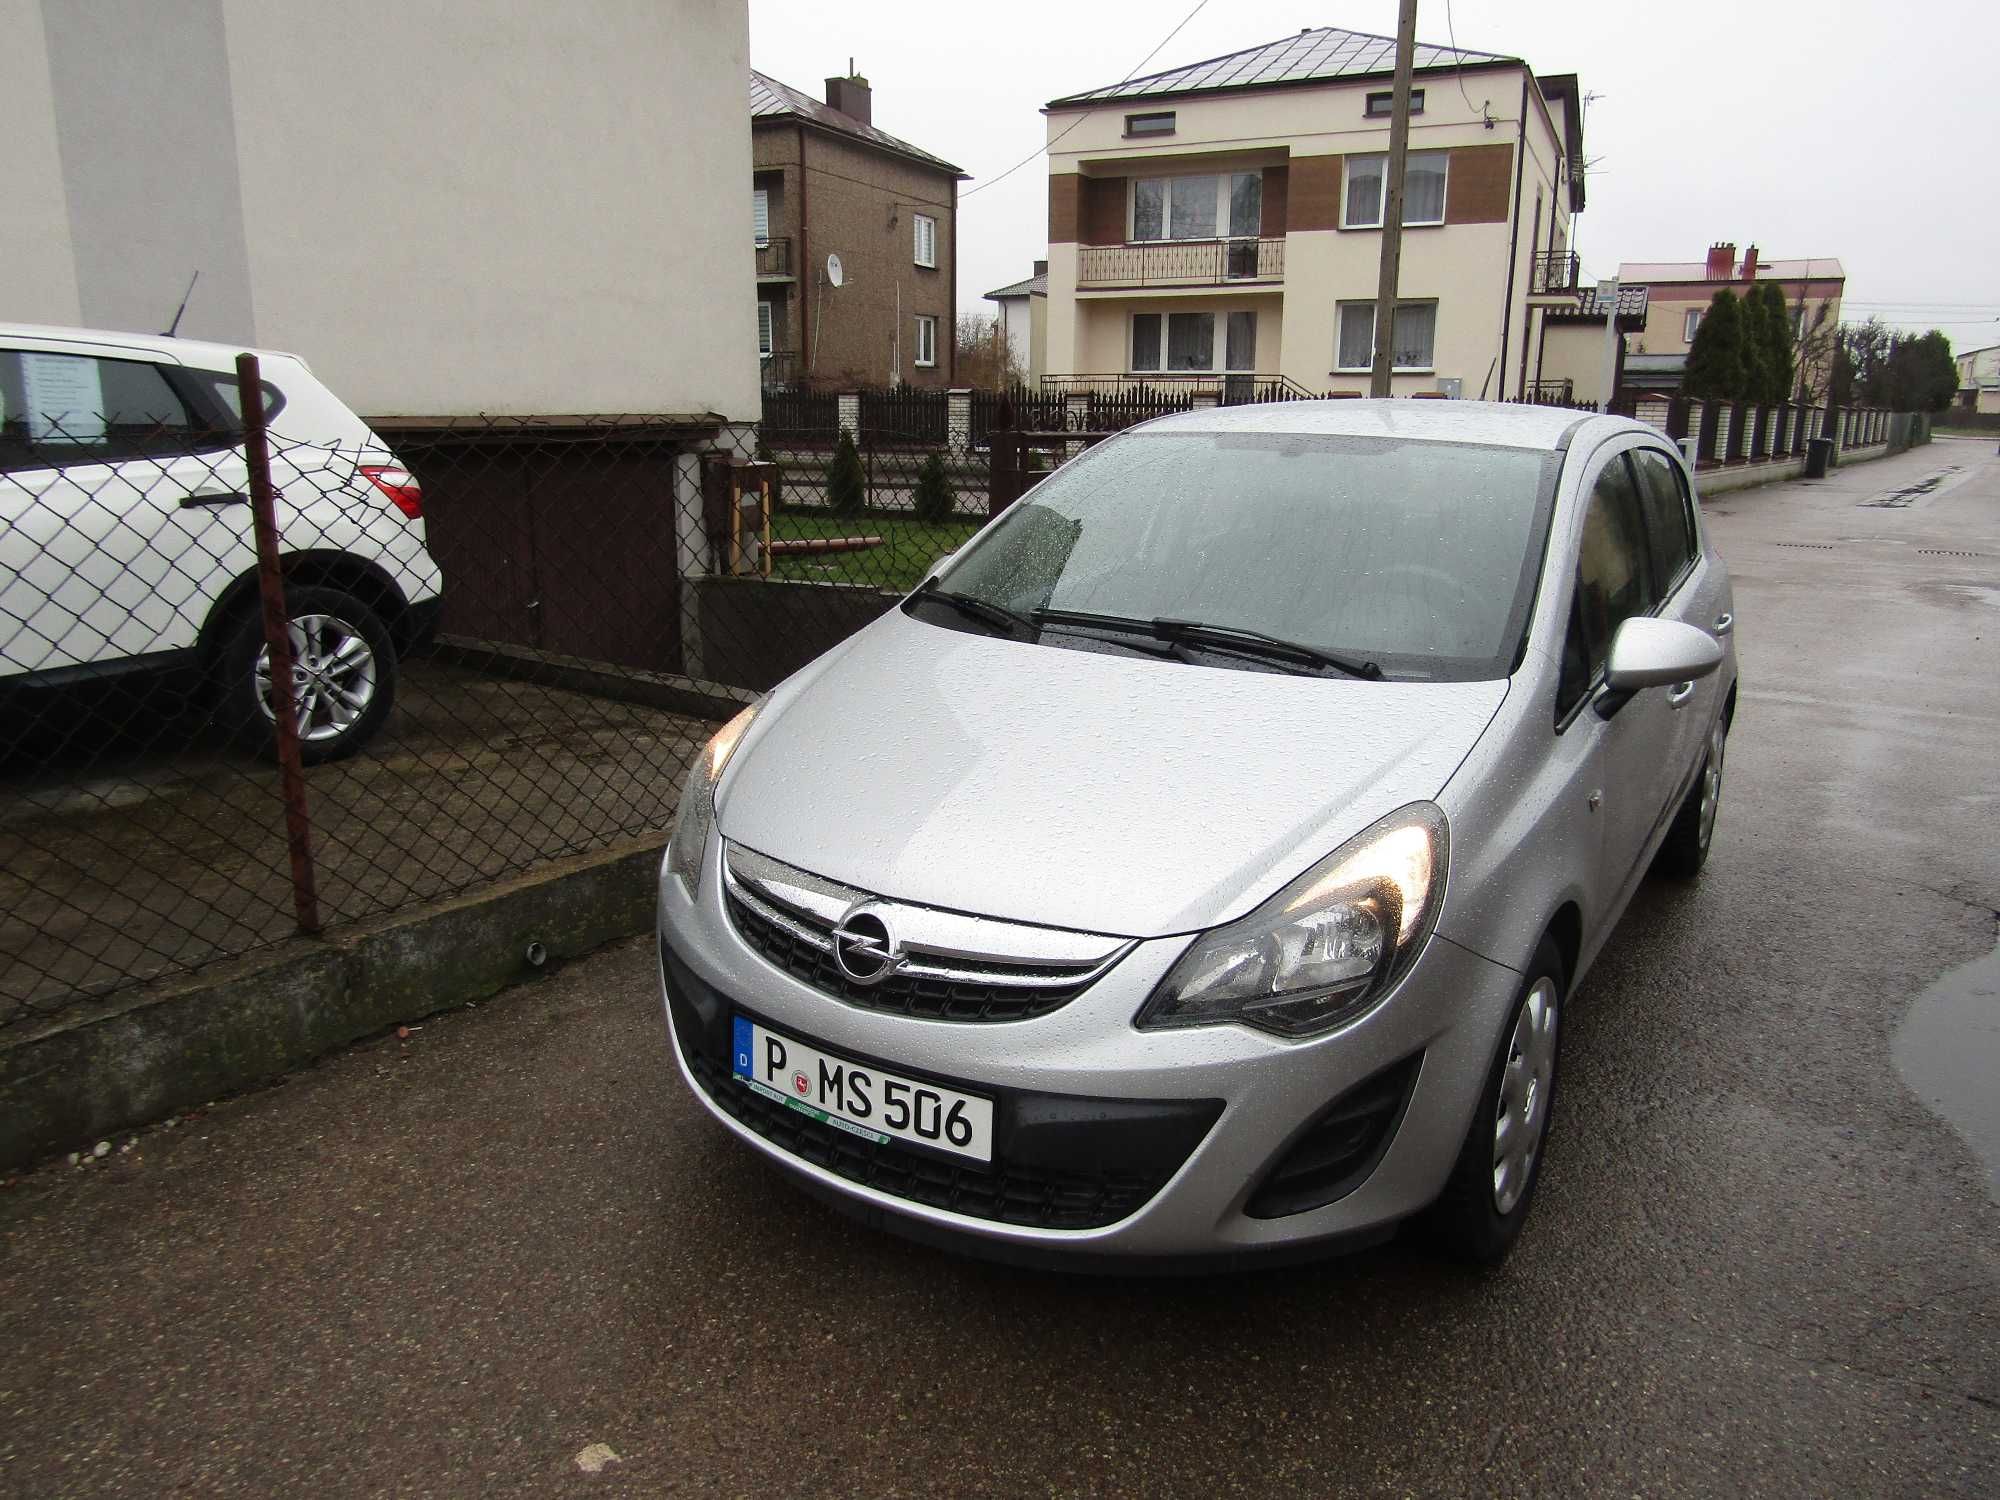 Opel Corsa D 2014 rok.1,2 benzyna 85 KM.159tys.km